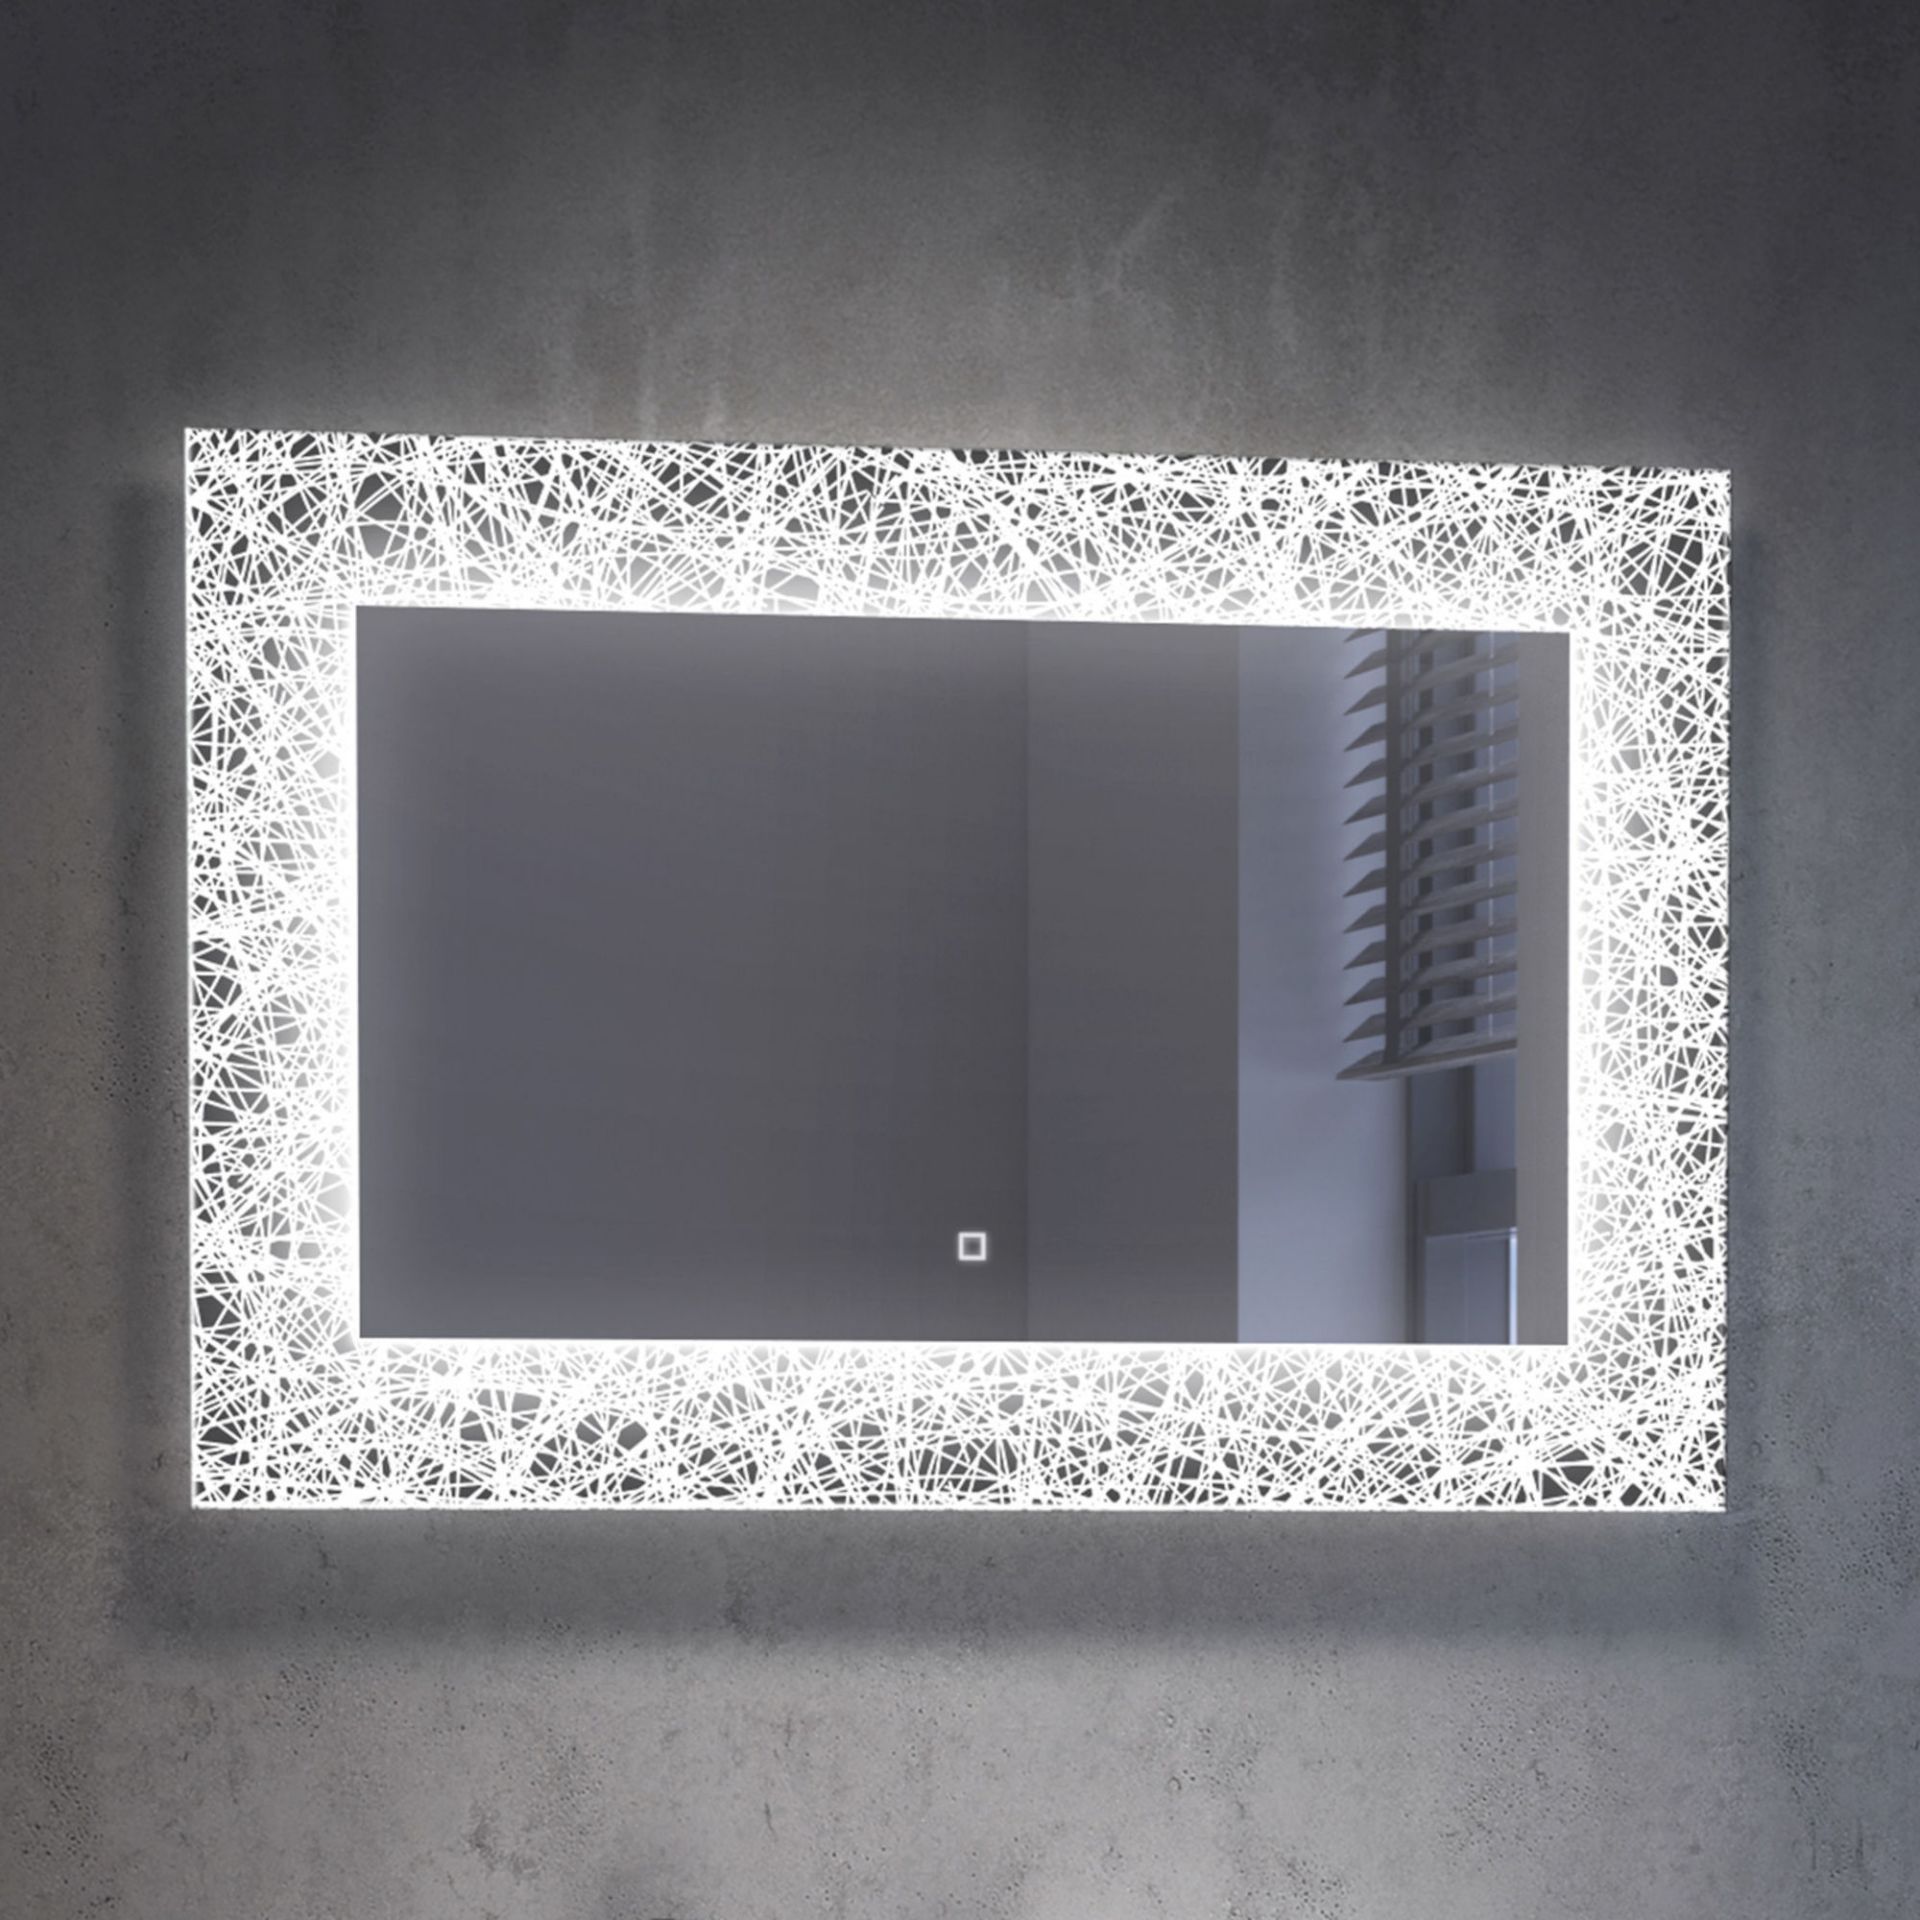 (KL189) 900x600mm Celestial Designer Illuminated LED Mirror - Switch Control. RRP £399.99. We love